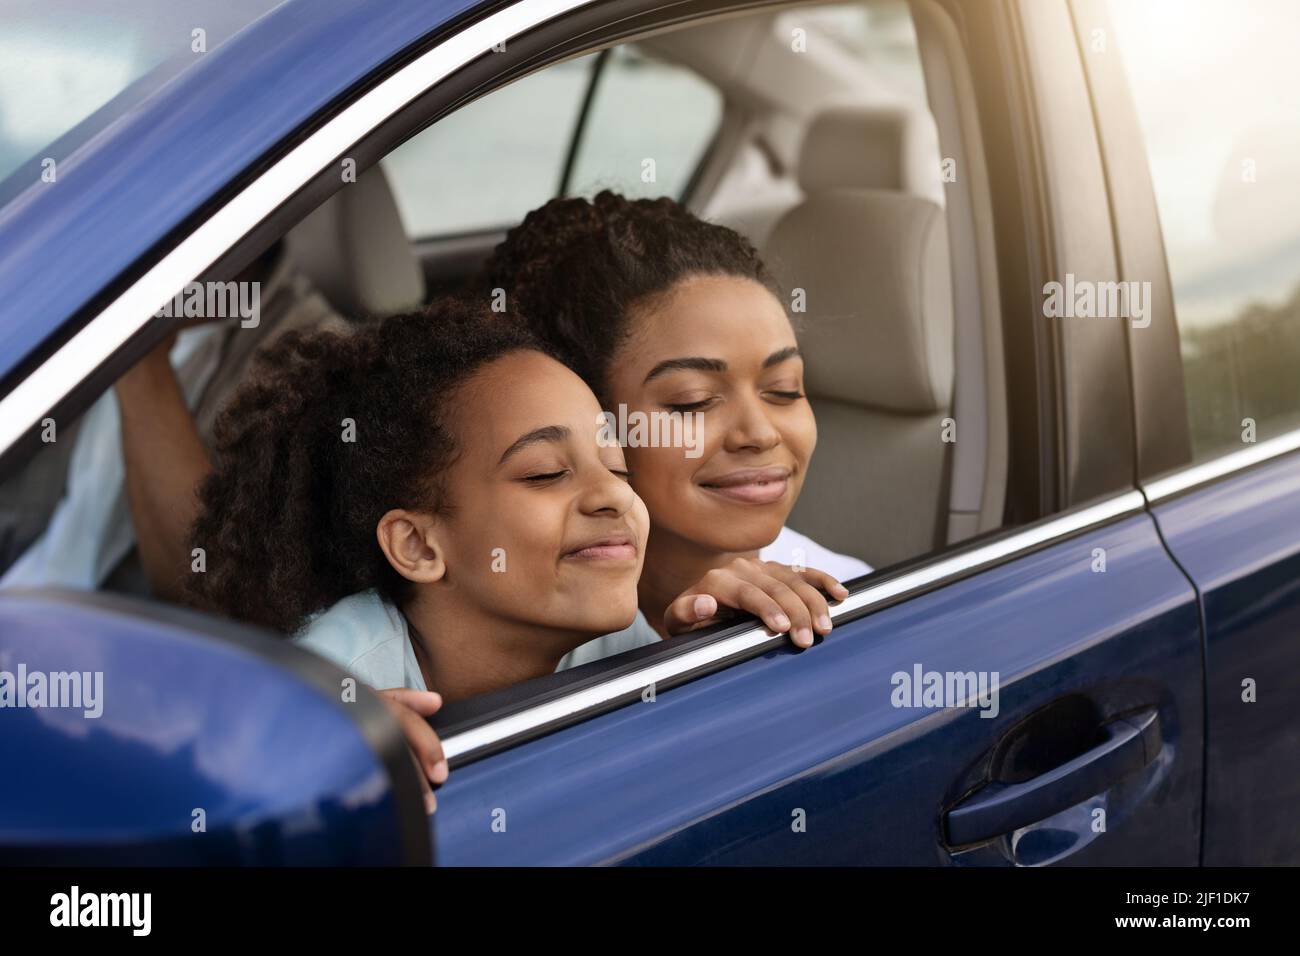 Joyful Black Mother And Daughter Sitting In Automobile Enjoying Trip Stock Photo